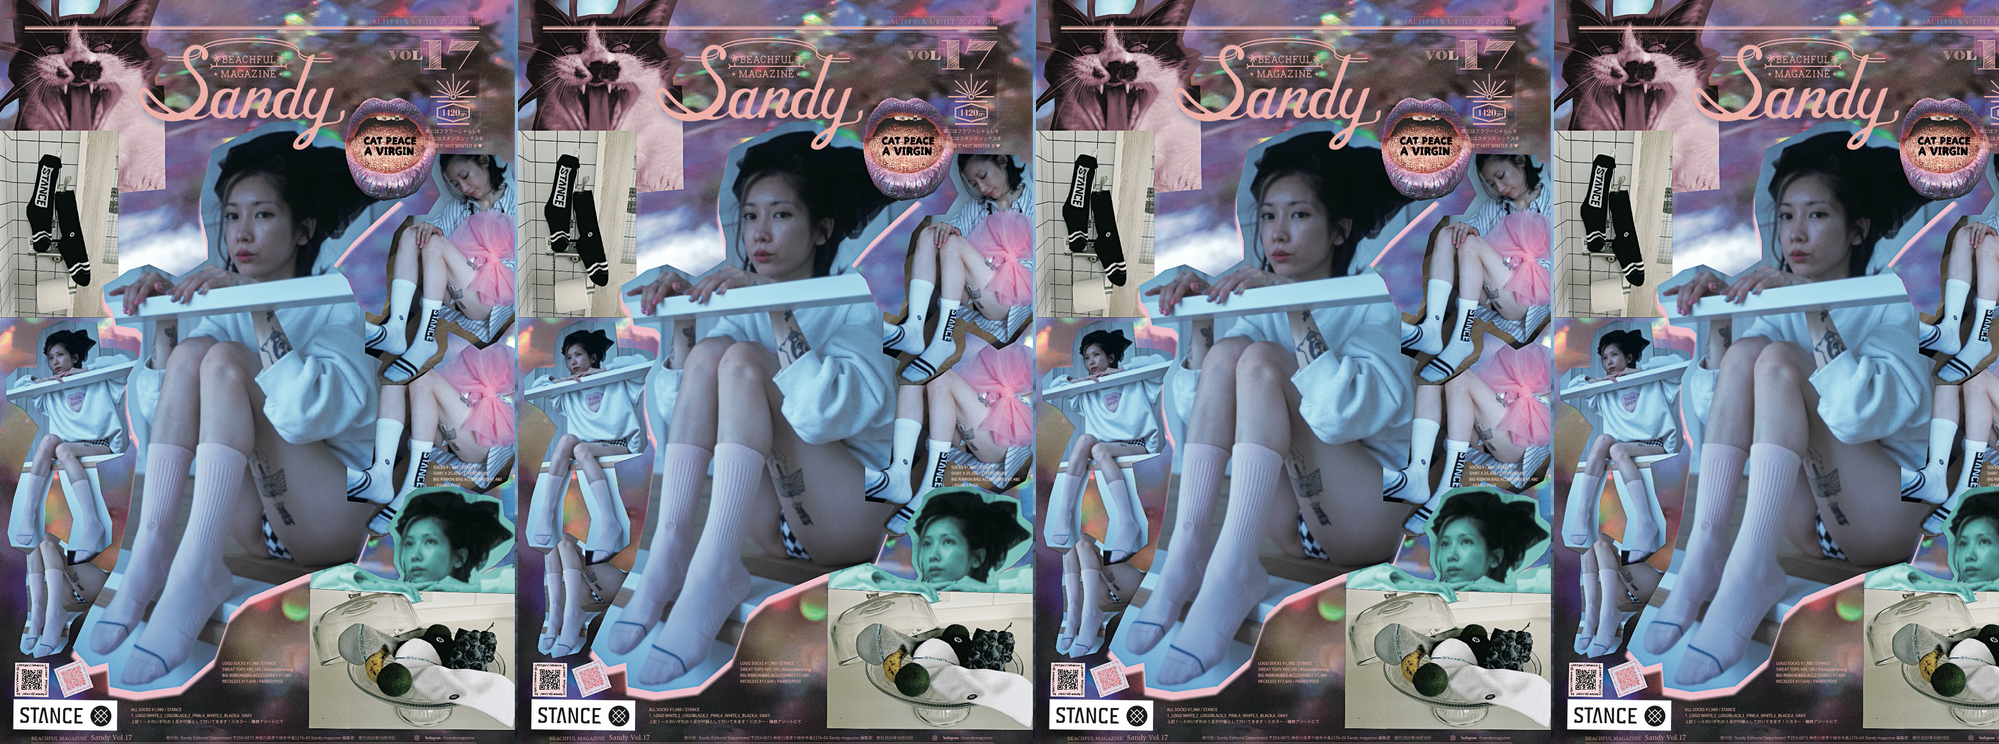 Sandy magazine